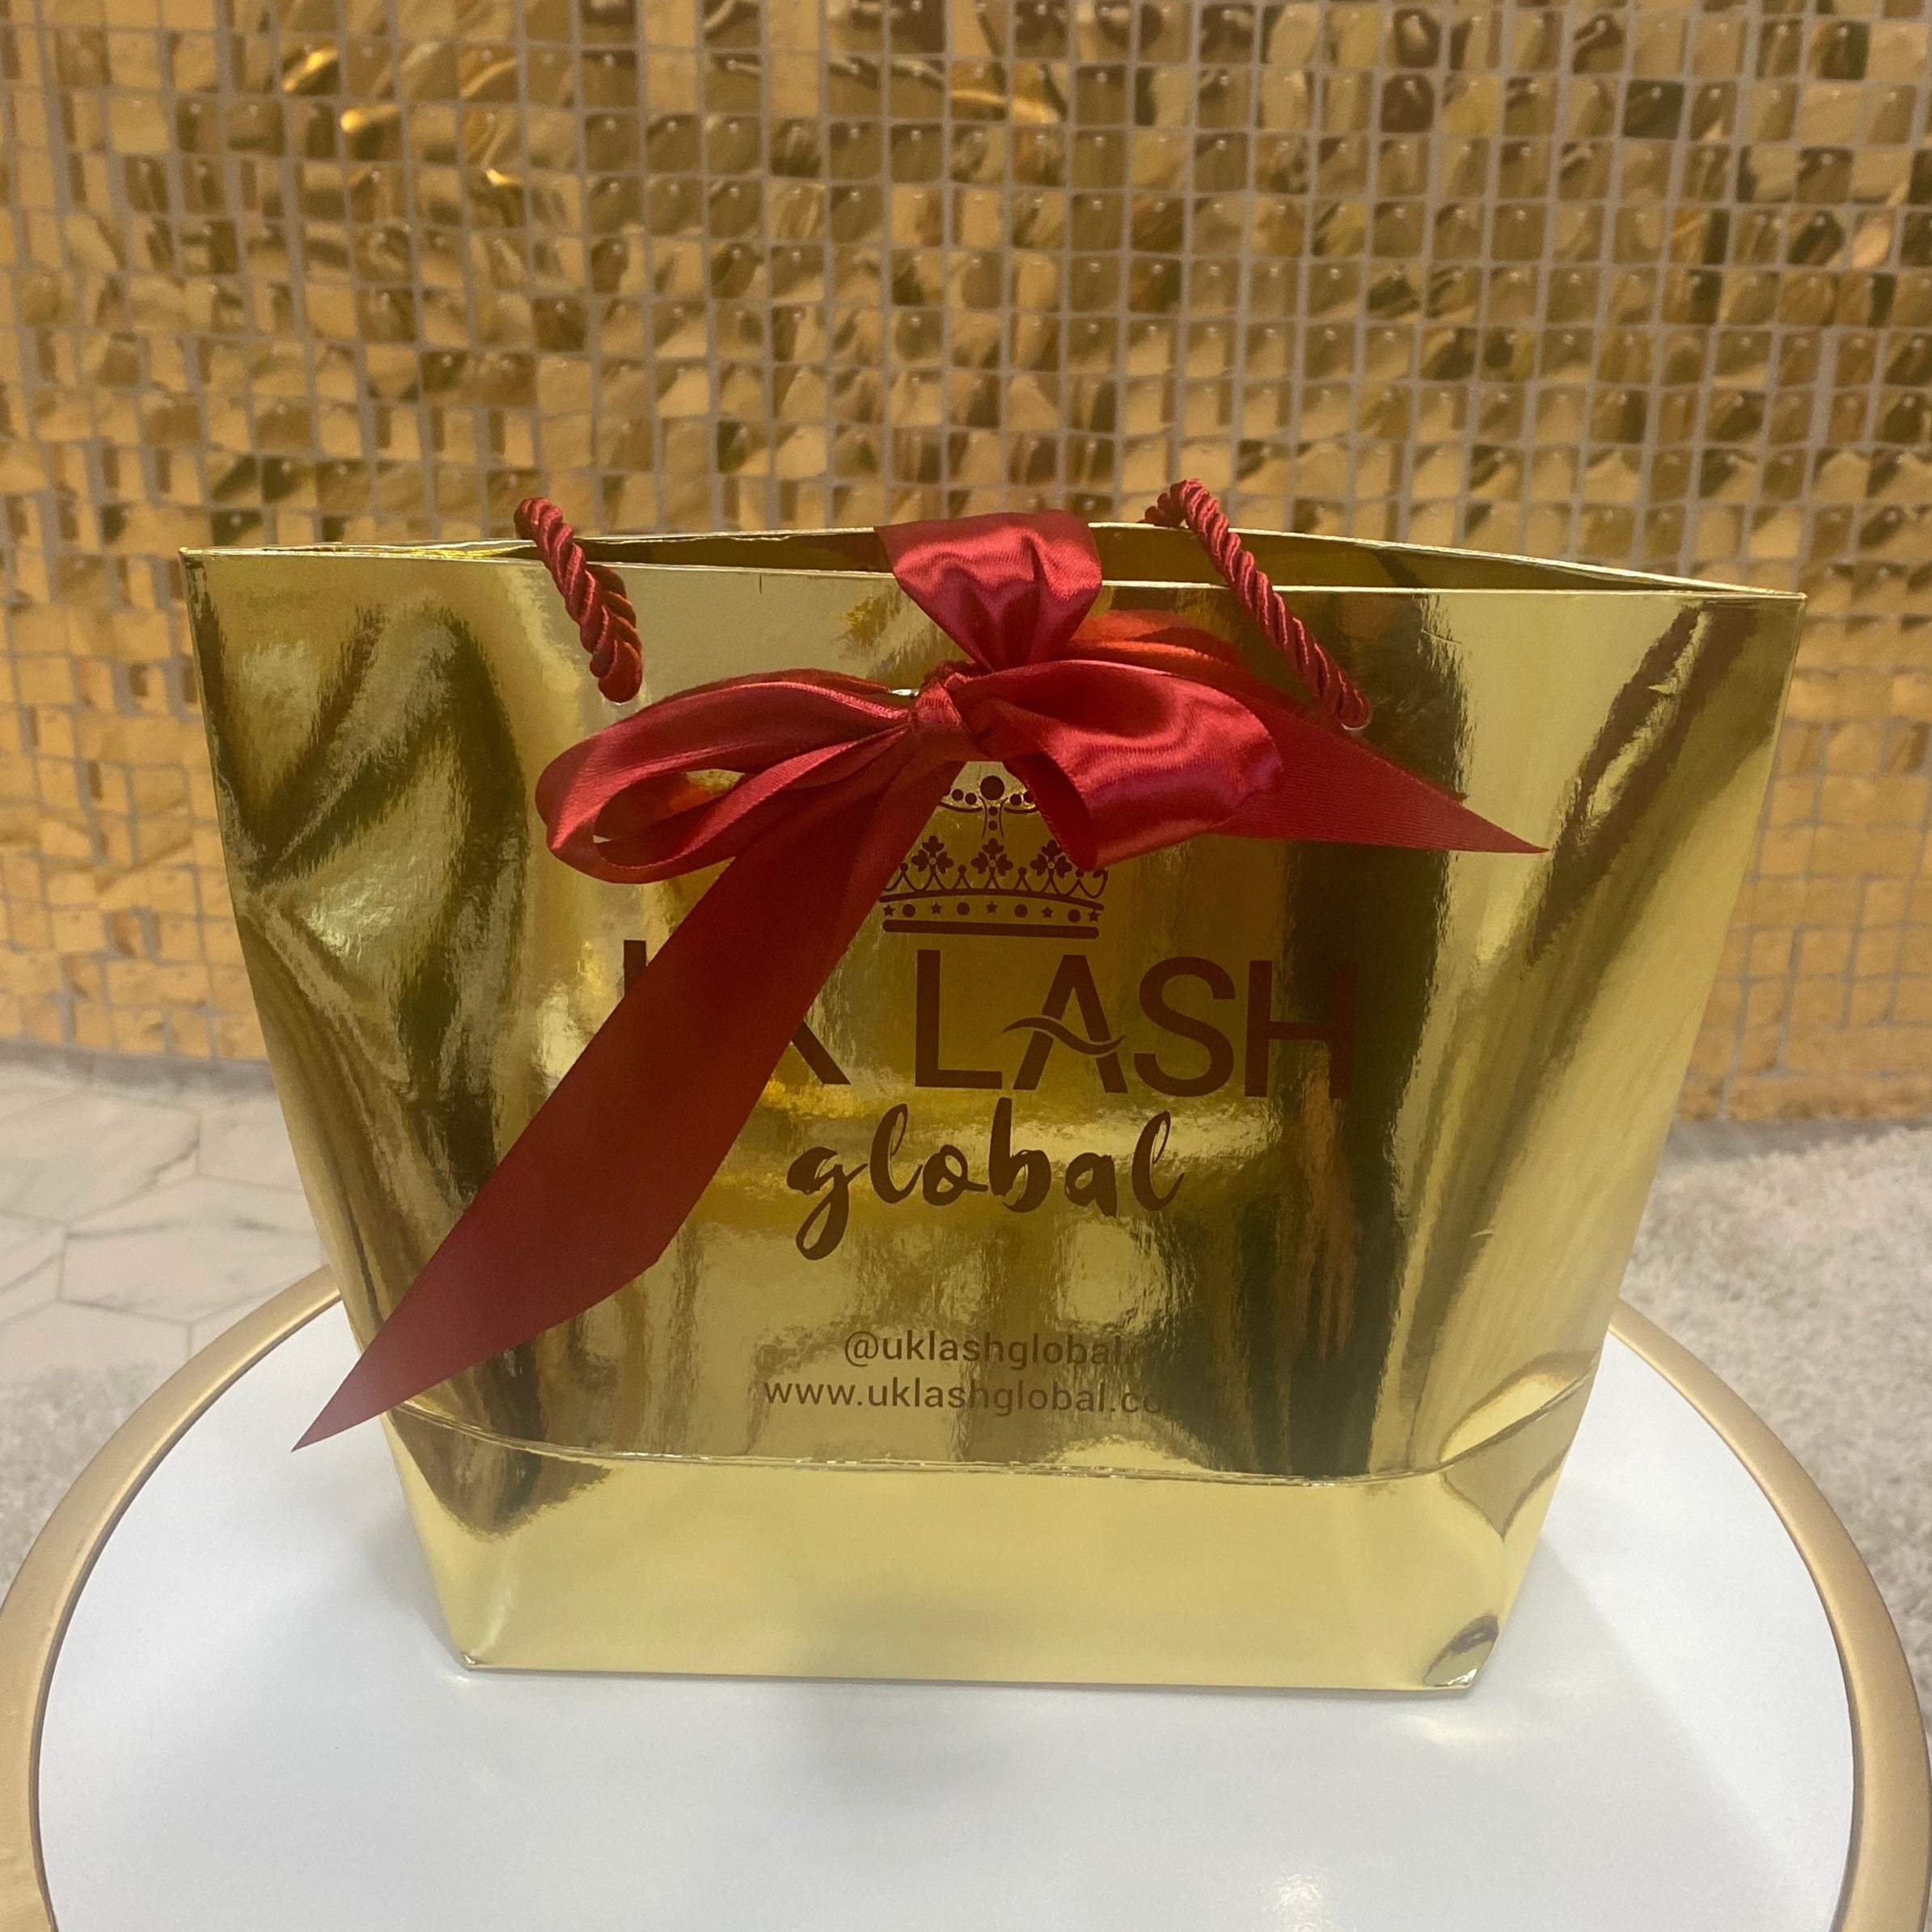 UK Lash Global Shopping/Kit Bag - Pack of 5